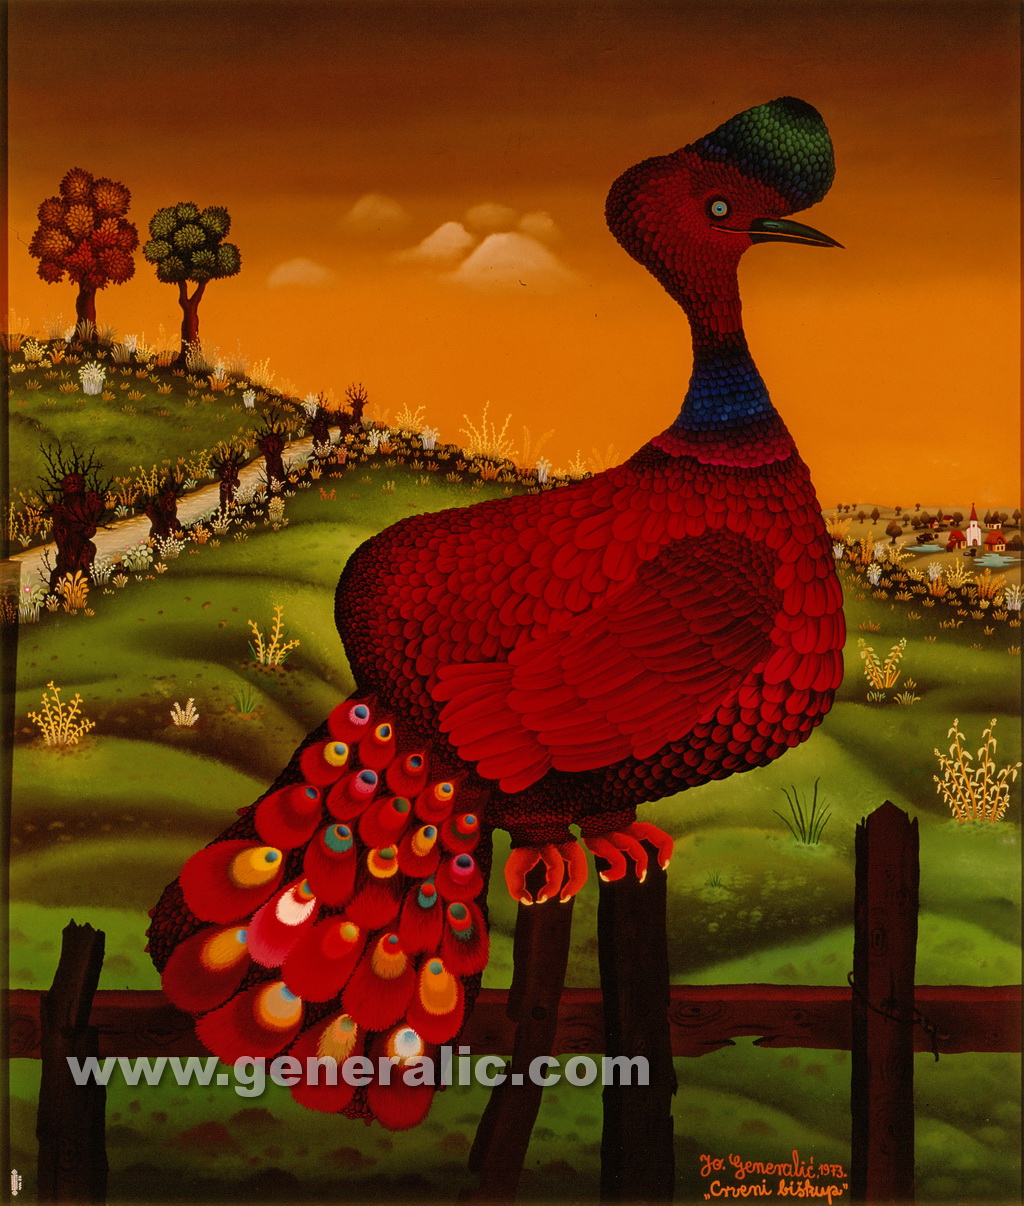 Josip Generalic, 1973, Red peacock, oil on glass